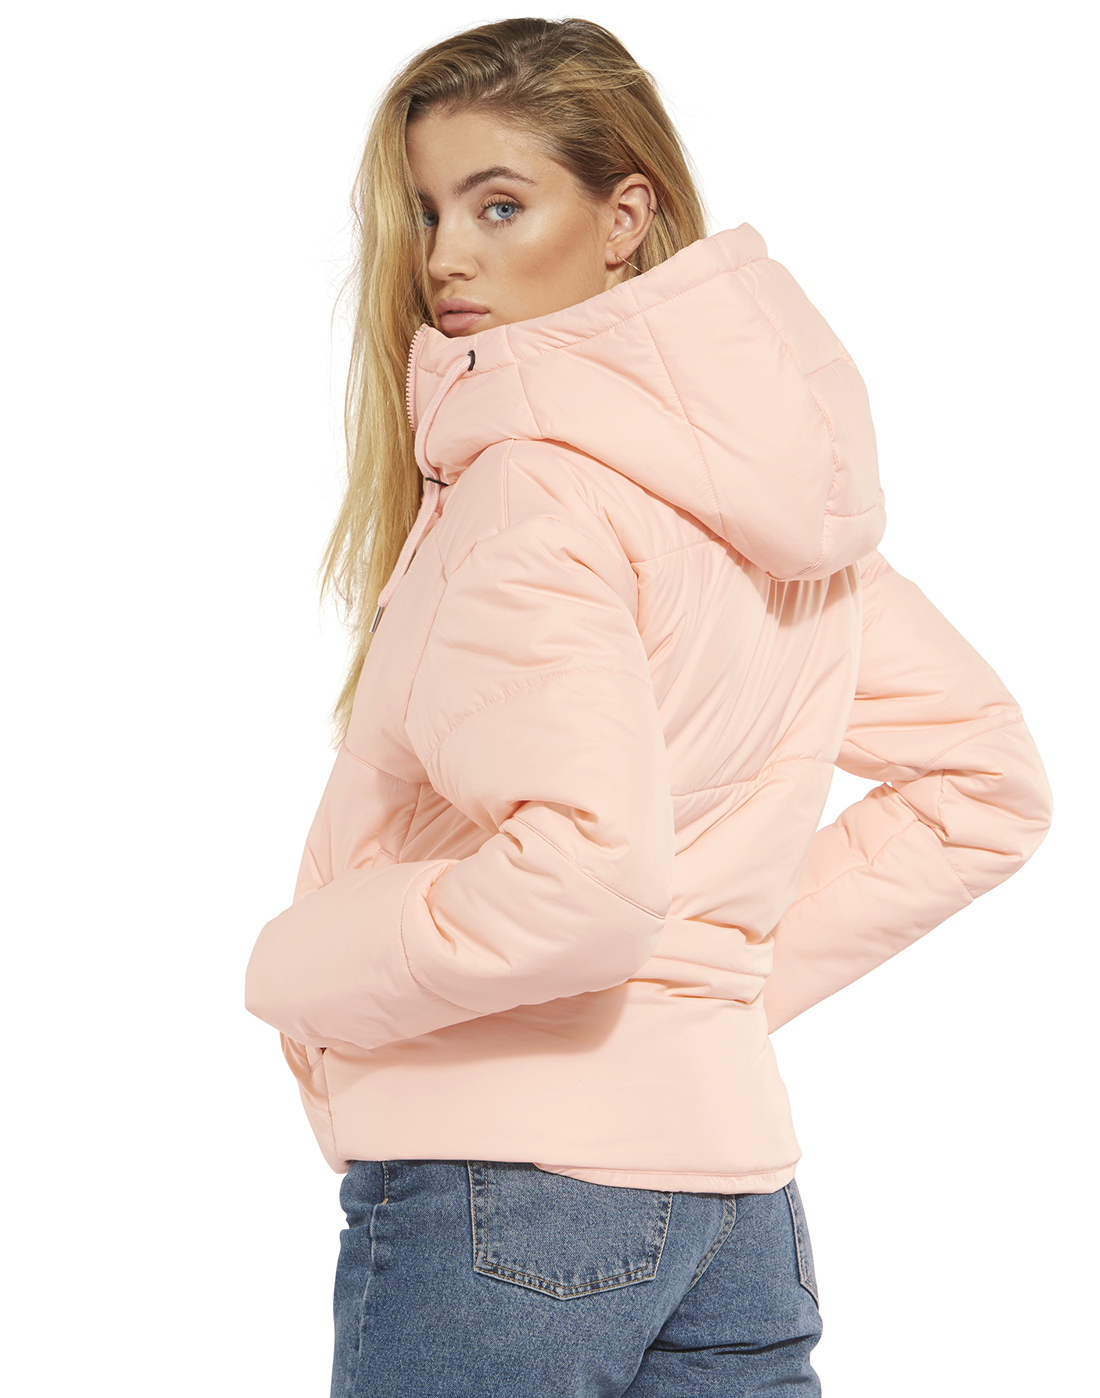 nike womens pink jacket